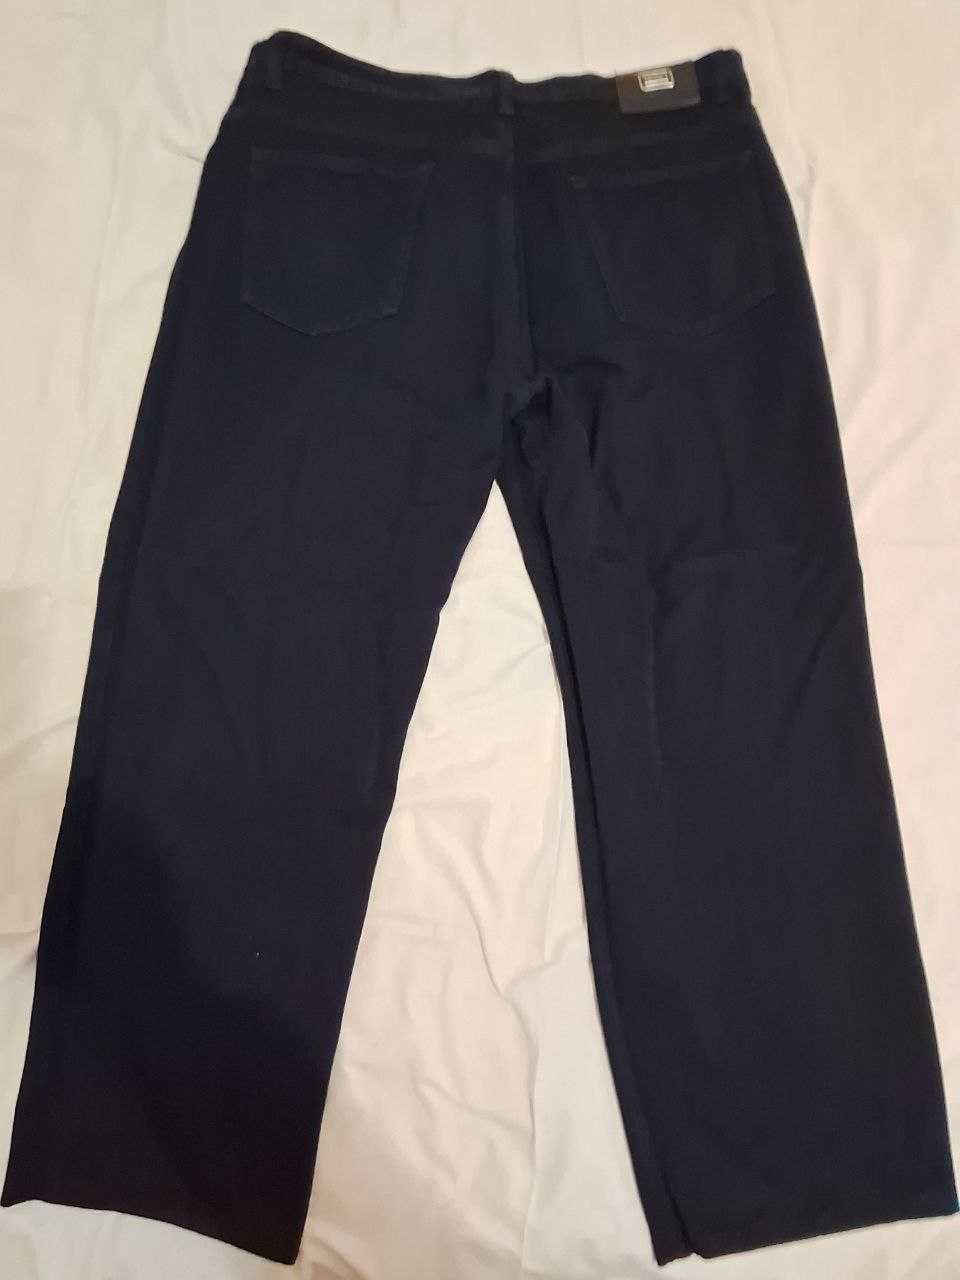 Плотные мужские джинсы б/у размер W44 L31